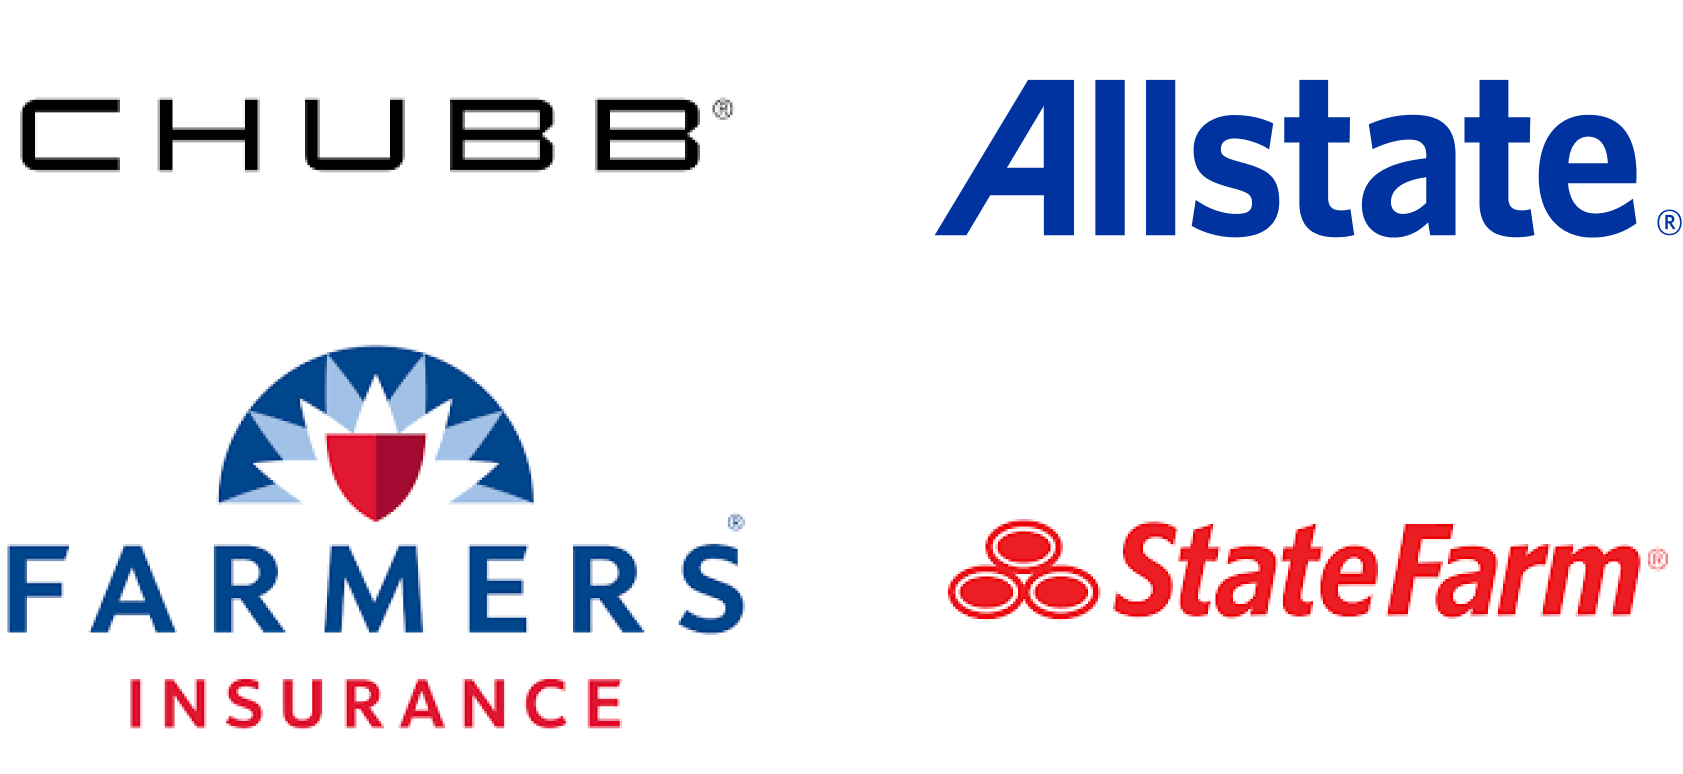 Chubb, Allstate, Farmers Insurance, and StateFarm logos